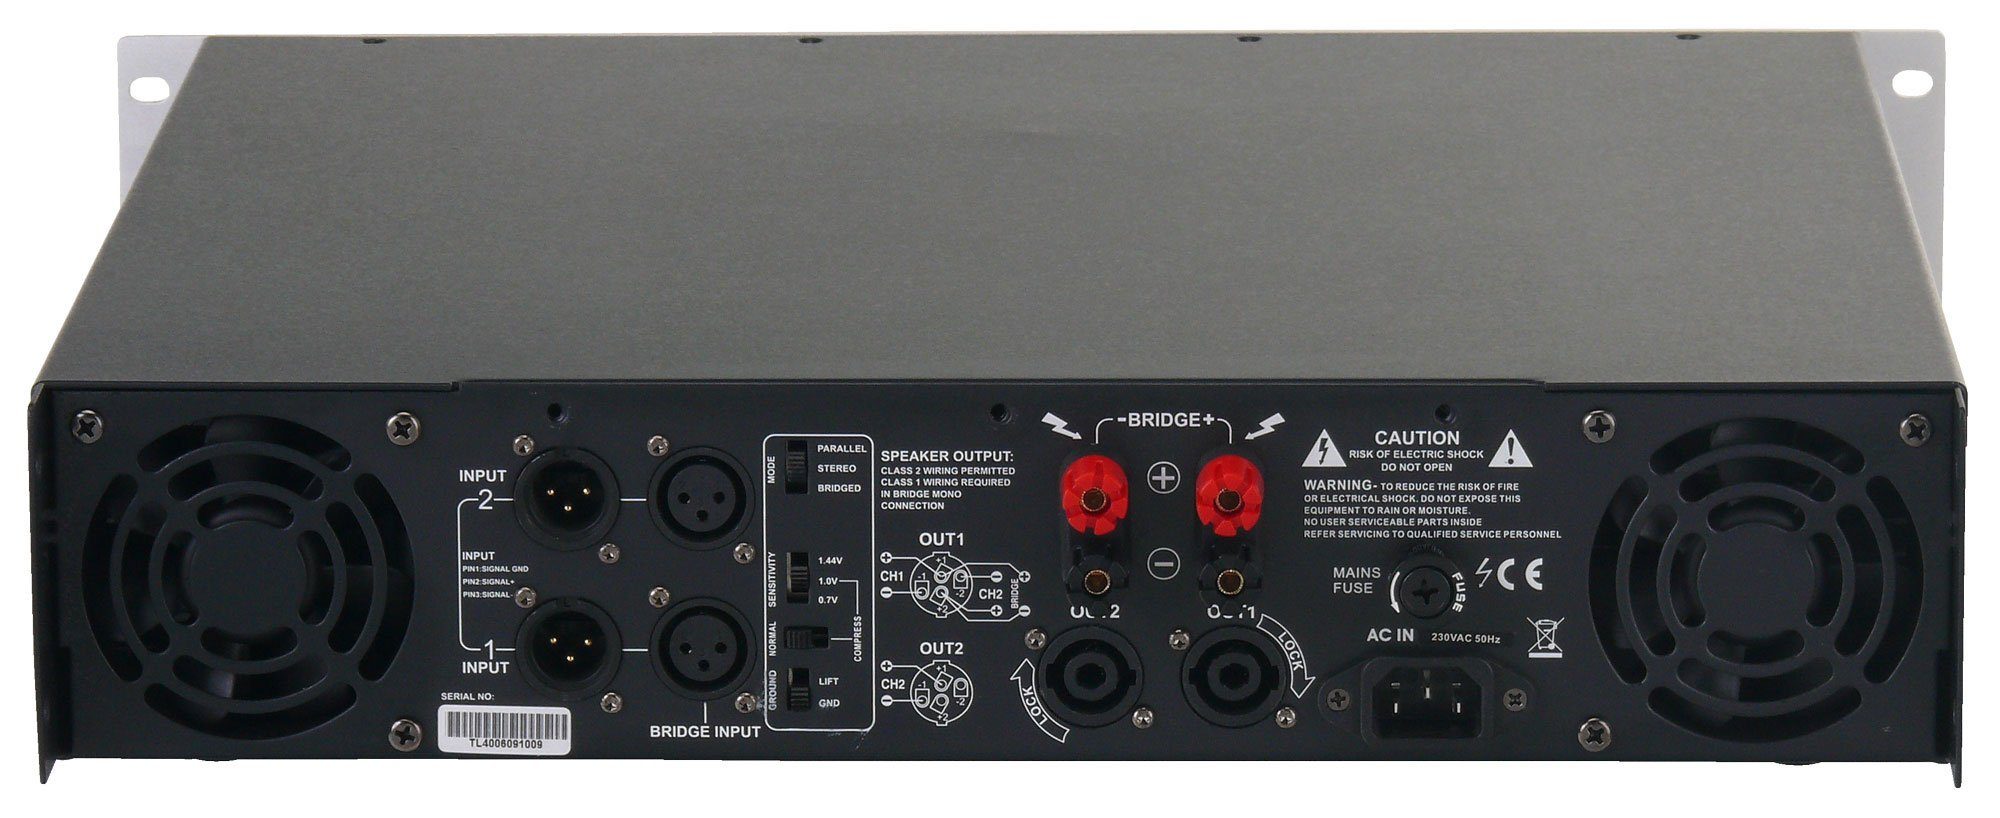 Schraubklemmen, 1000 an Verstärker TL-400 W, Pronomic Lautsprecher- mit Stereo-Leistungsverstärker (Anzahl 2 Ohm) Kanäle: Endstufe Kanal 2000 2 2x Watt